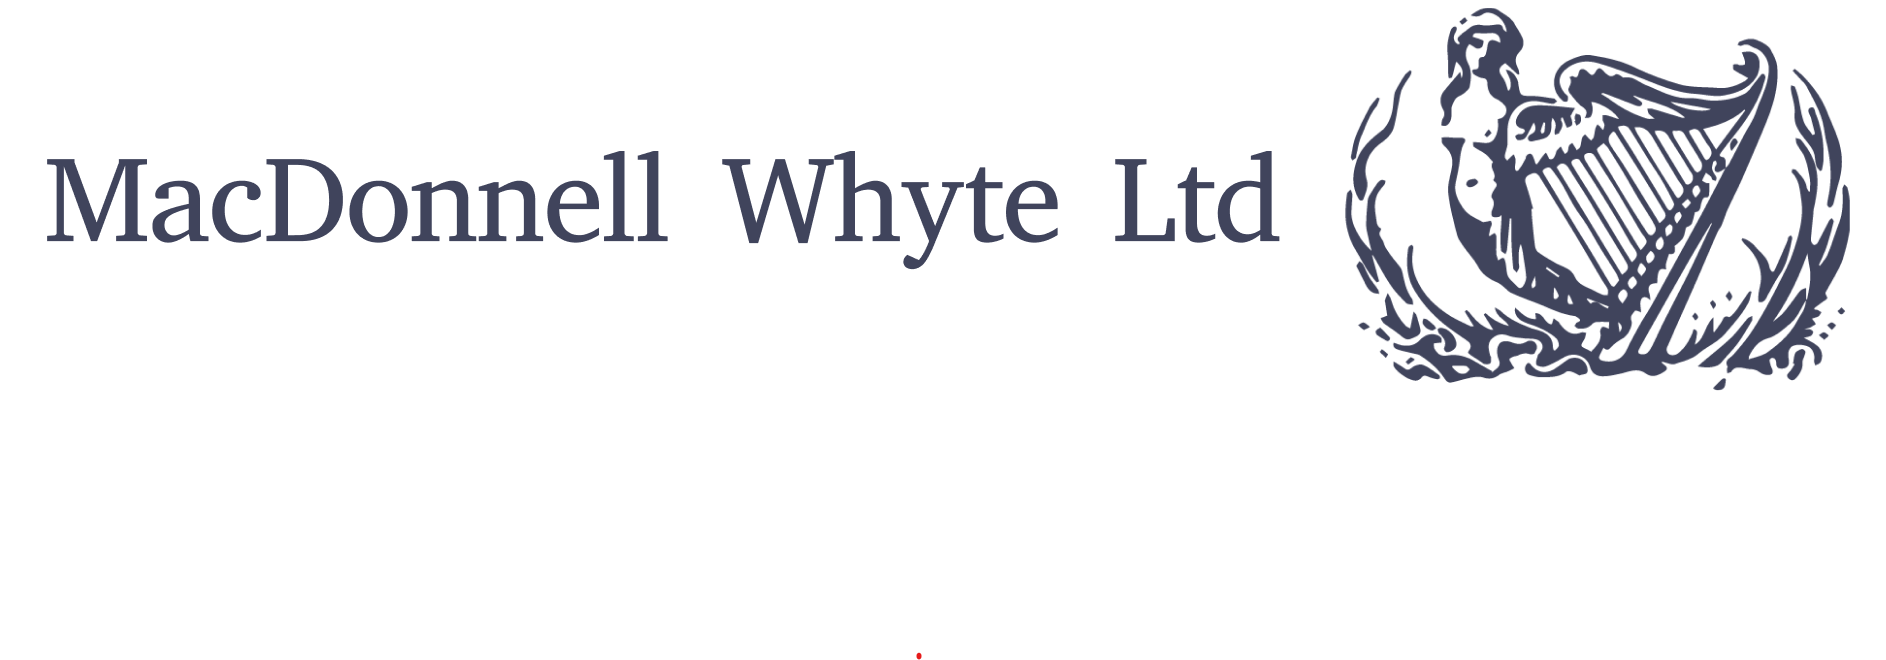 MacDonnell Whyte Ltd